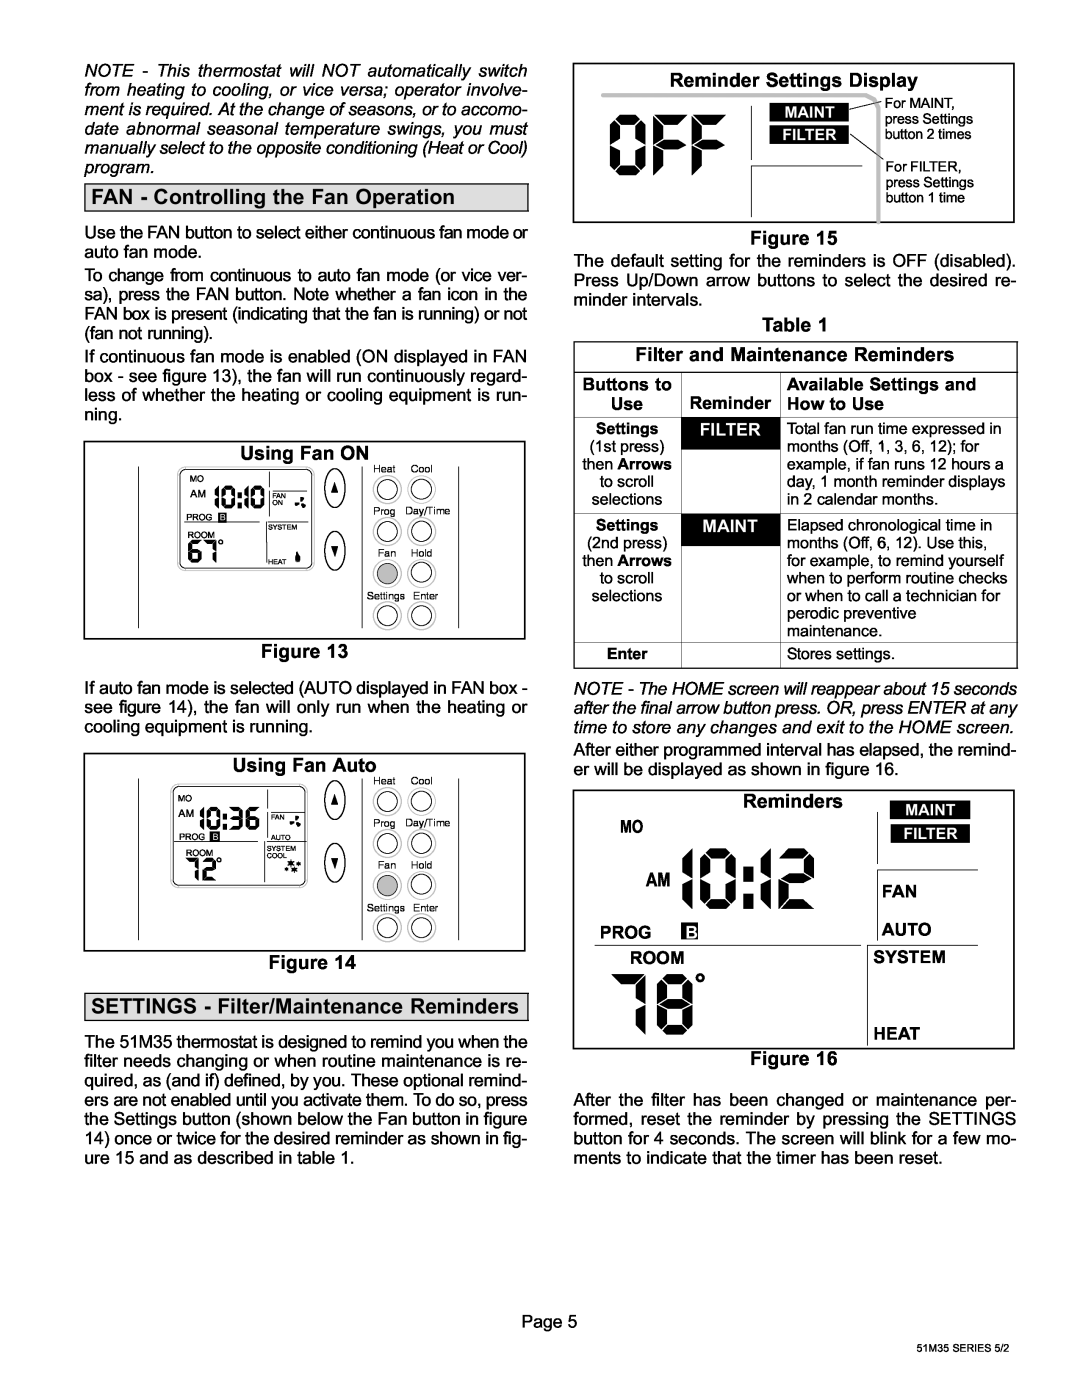 Lennox International Inc 51M37 operation manual Pm, PM I0 36 FAN, FAN − Controlling the Fan Operation, Reminders 